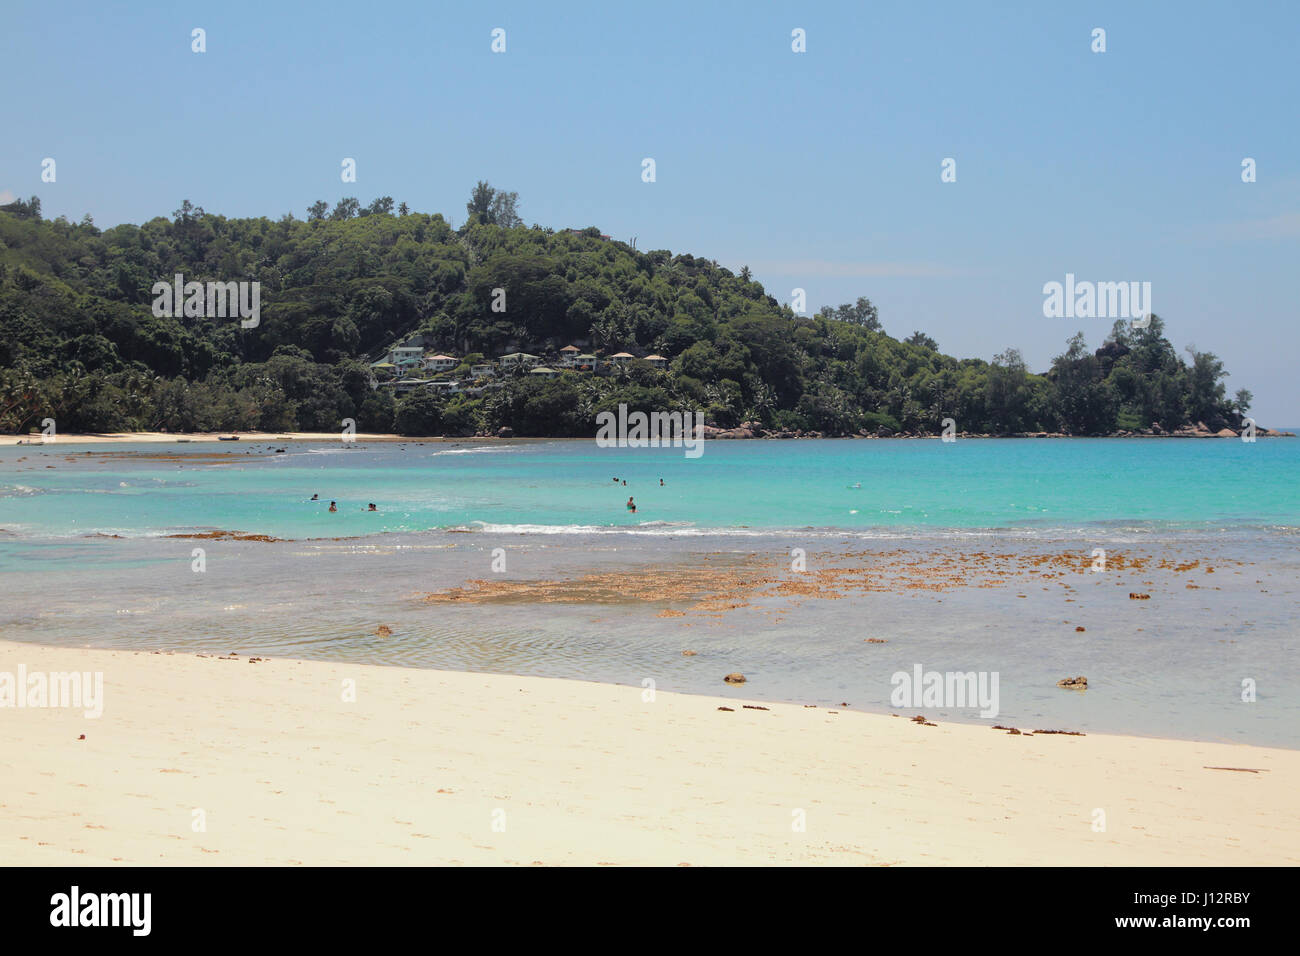 Sandy beach and zone of bathing. Baie Lazare, Mahe, Seychelles Stock Photo